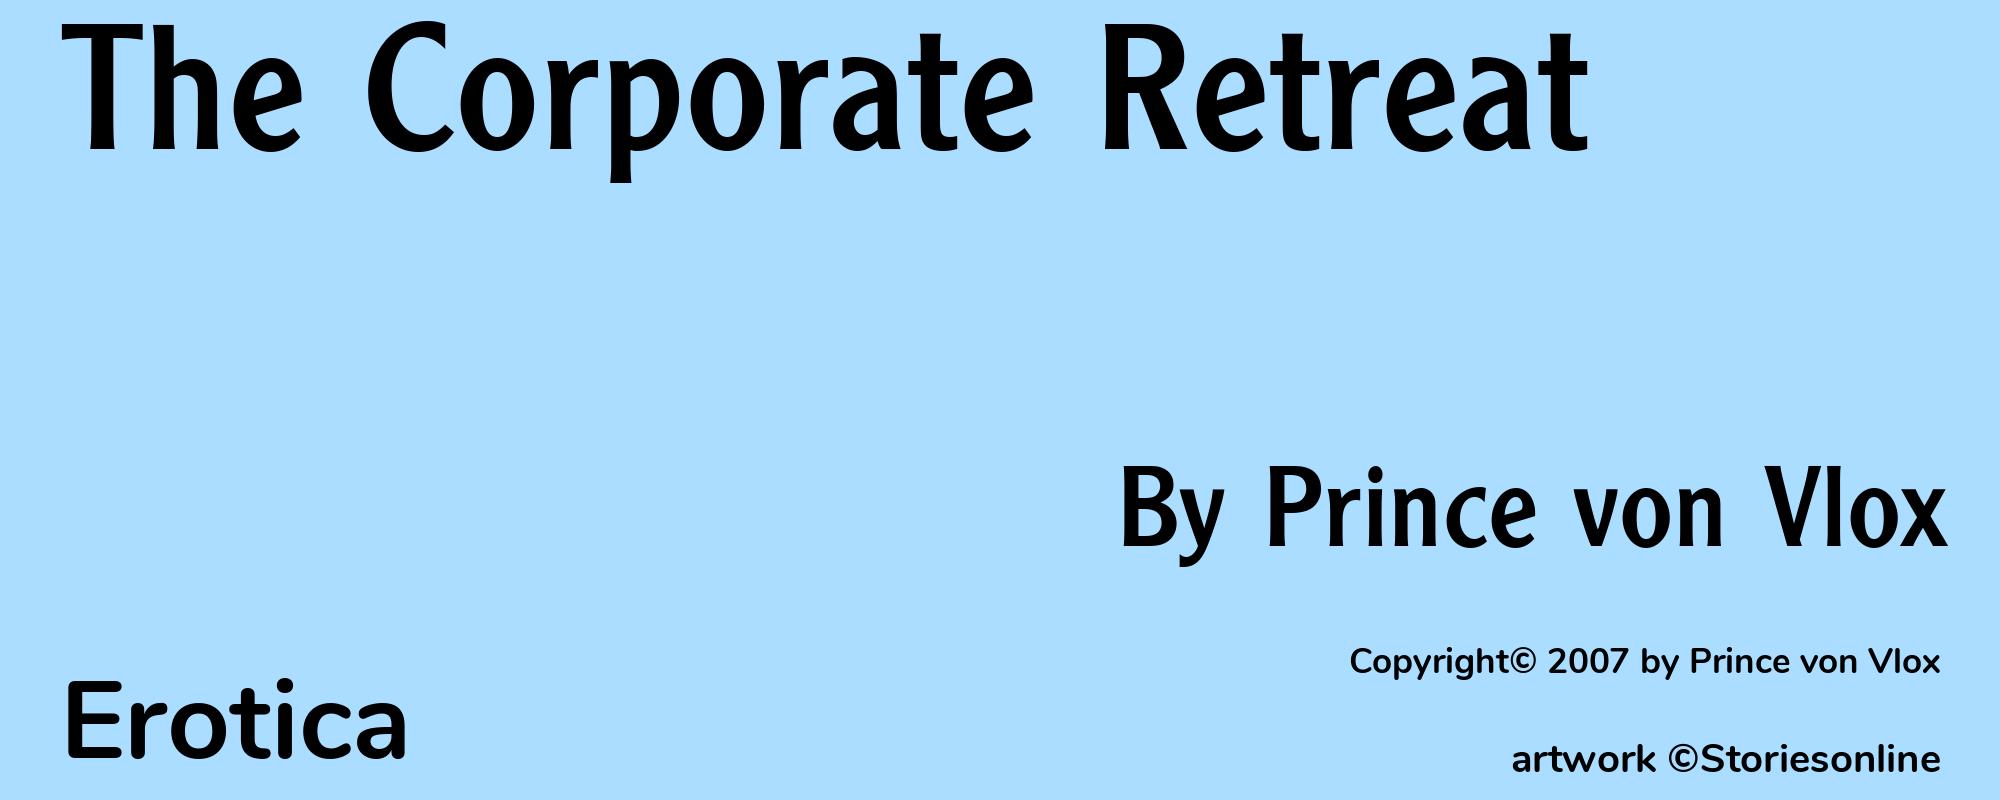 The Corporate Retreat - Cover